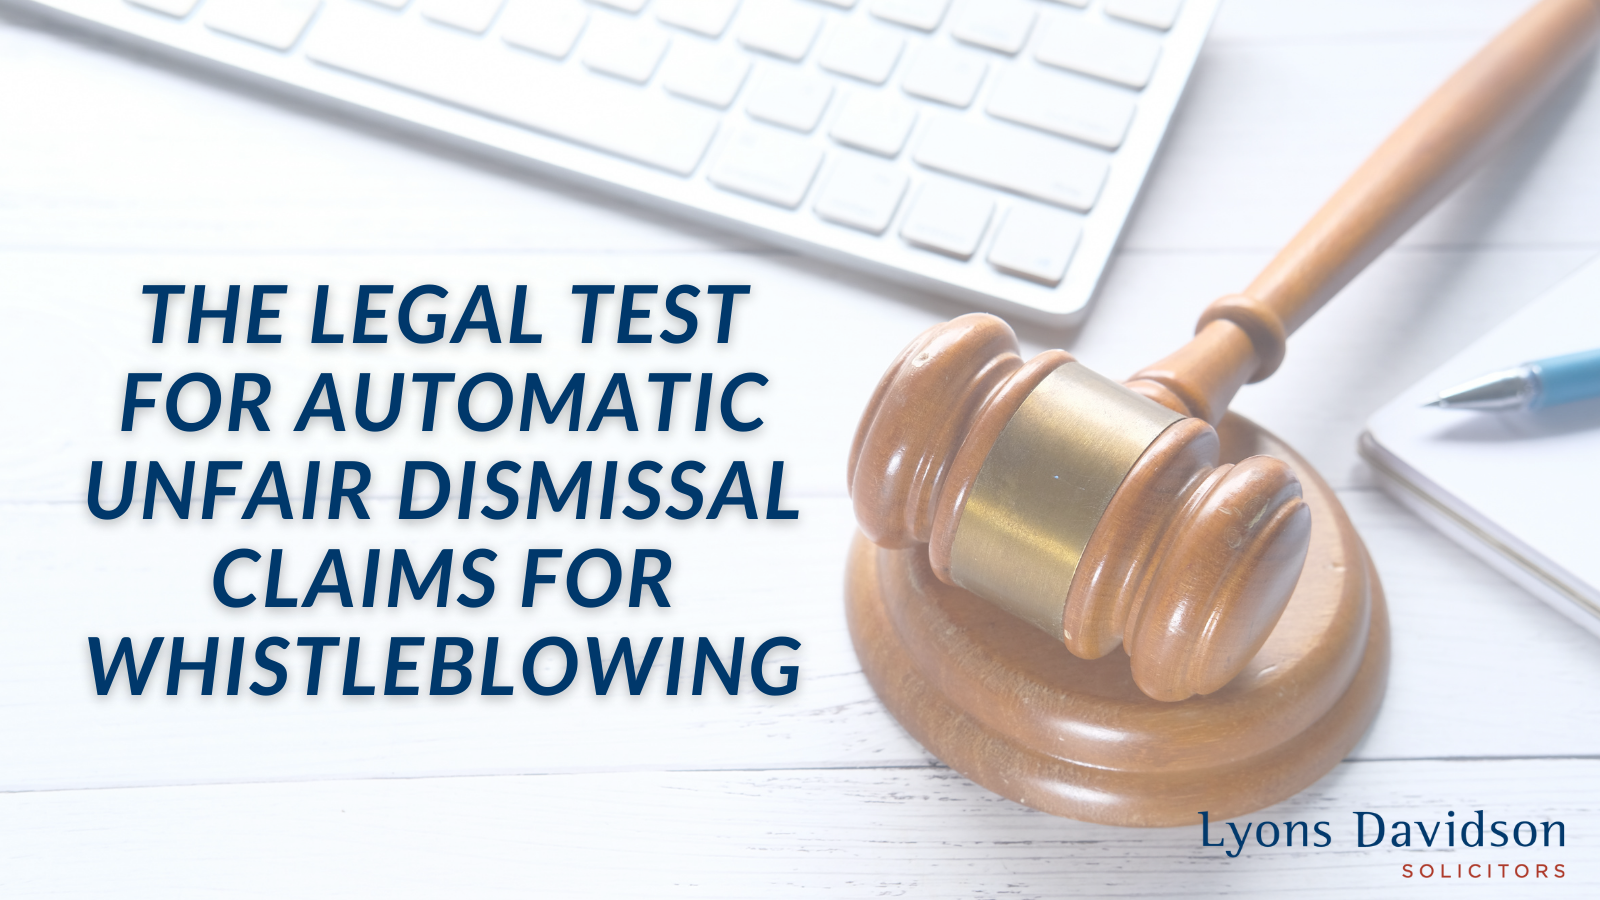 George Eliot Duplicatie beklimmen The legal Test for Automatic Unfair Dismissal claims for Whistleblowing -  Lyons Davidson Solicitors